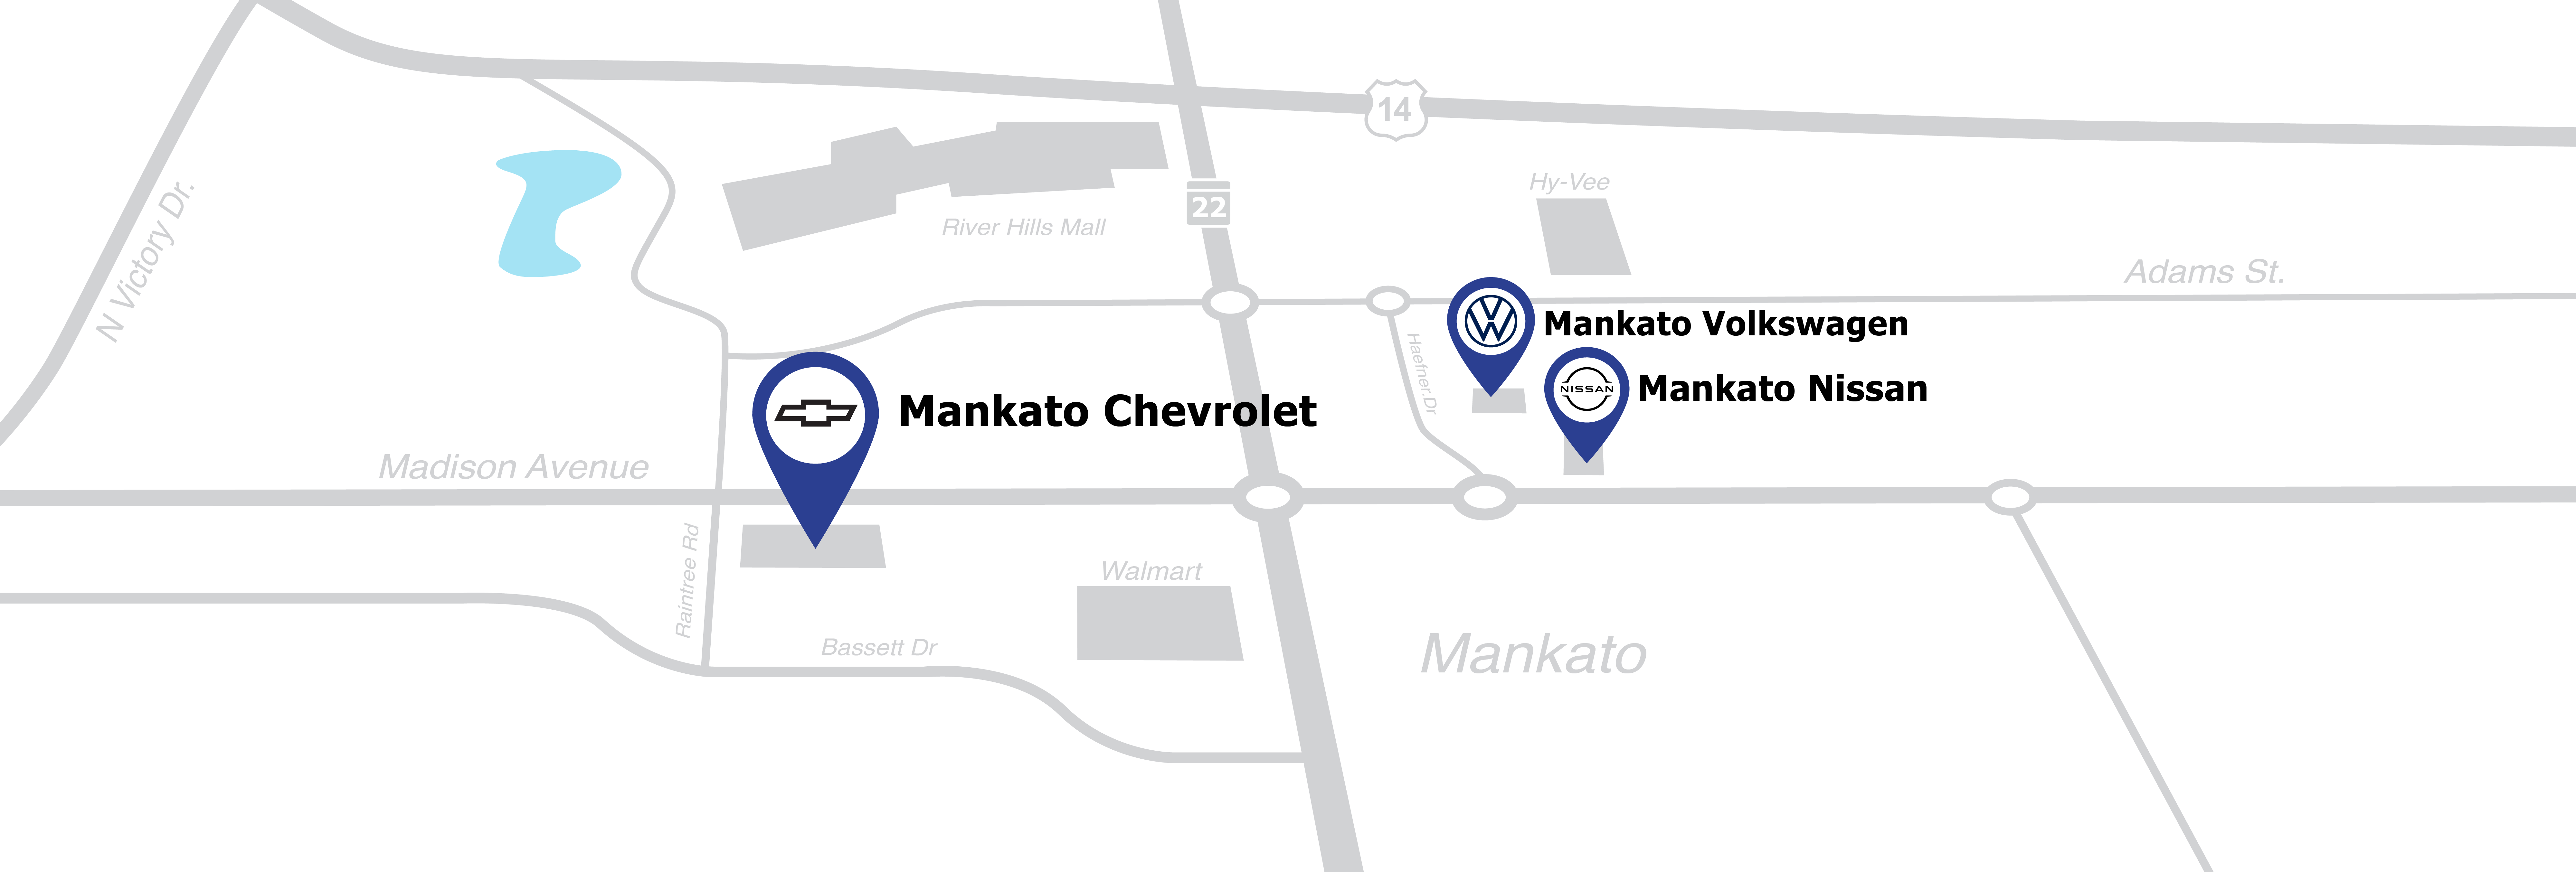 Mankato Motors Dealership Car Buying Center